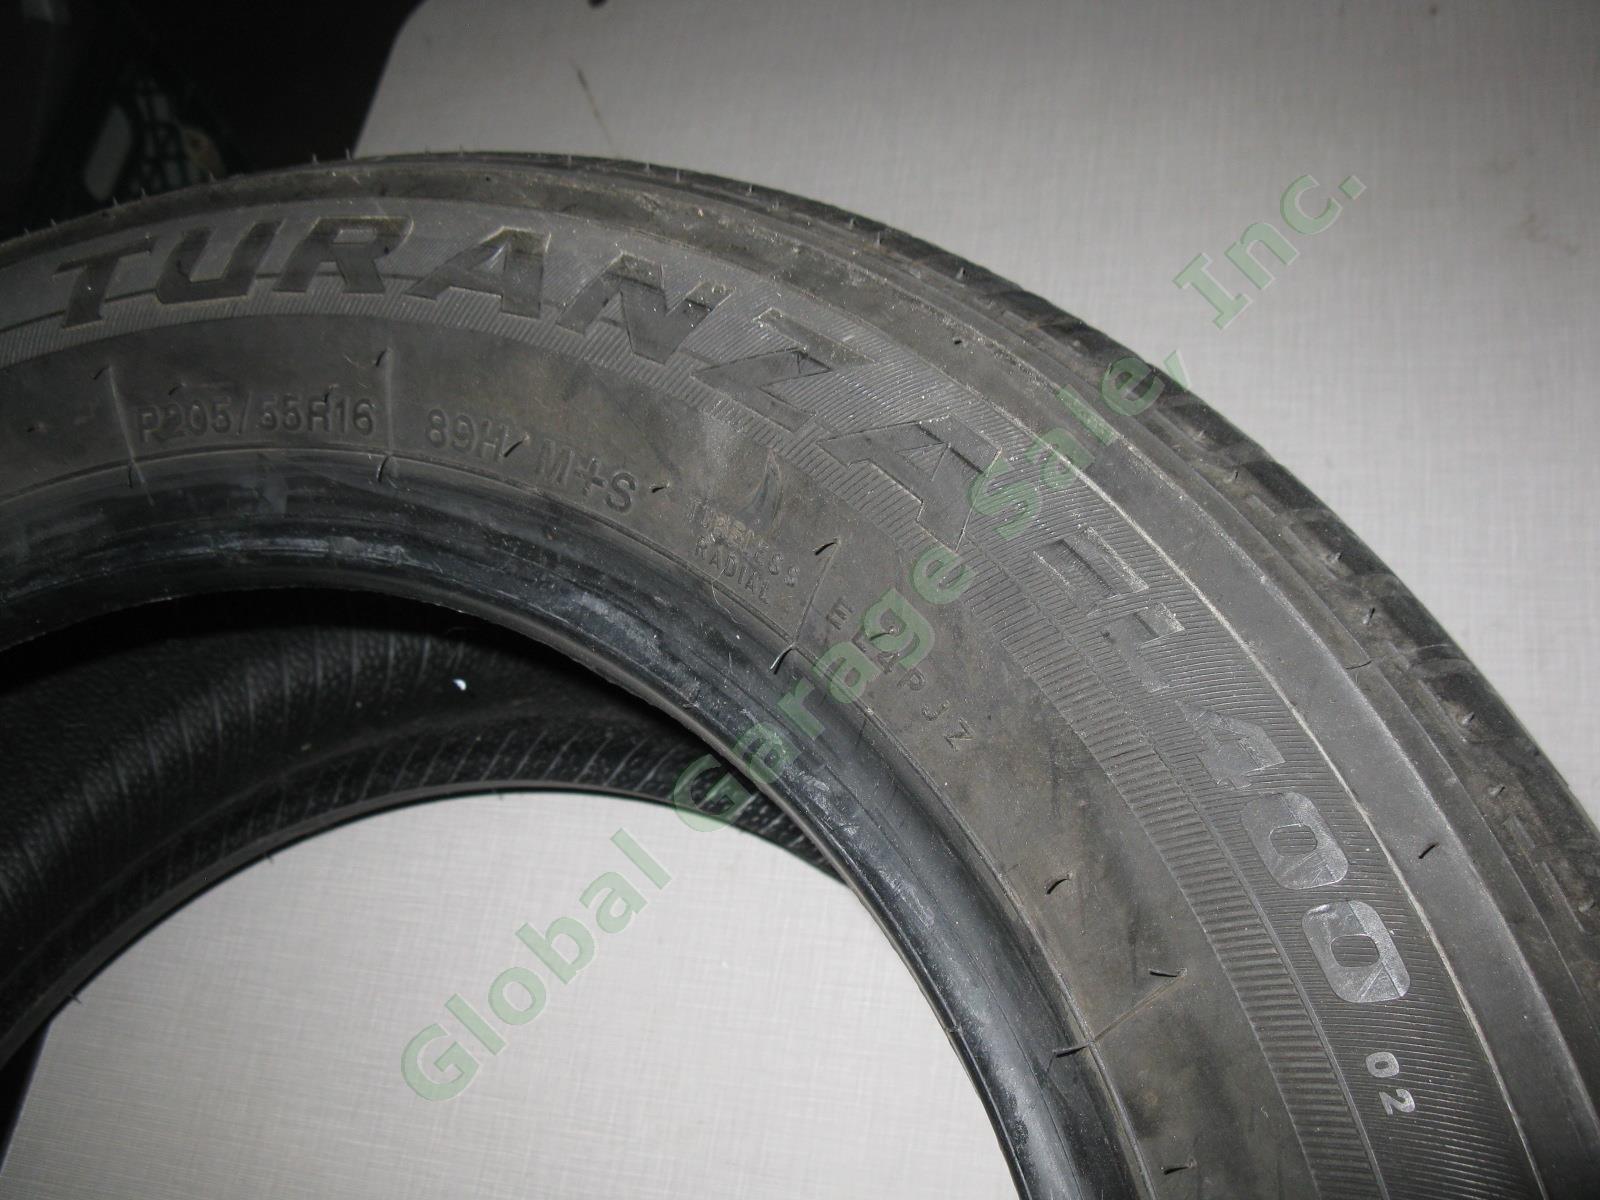 4 Bridgestone Turanza EL400-02 16" P205/55R16 89H M+S RFT Tires Set ~200 Miles!! 3